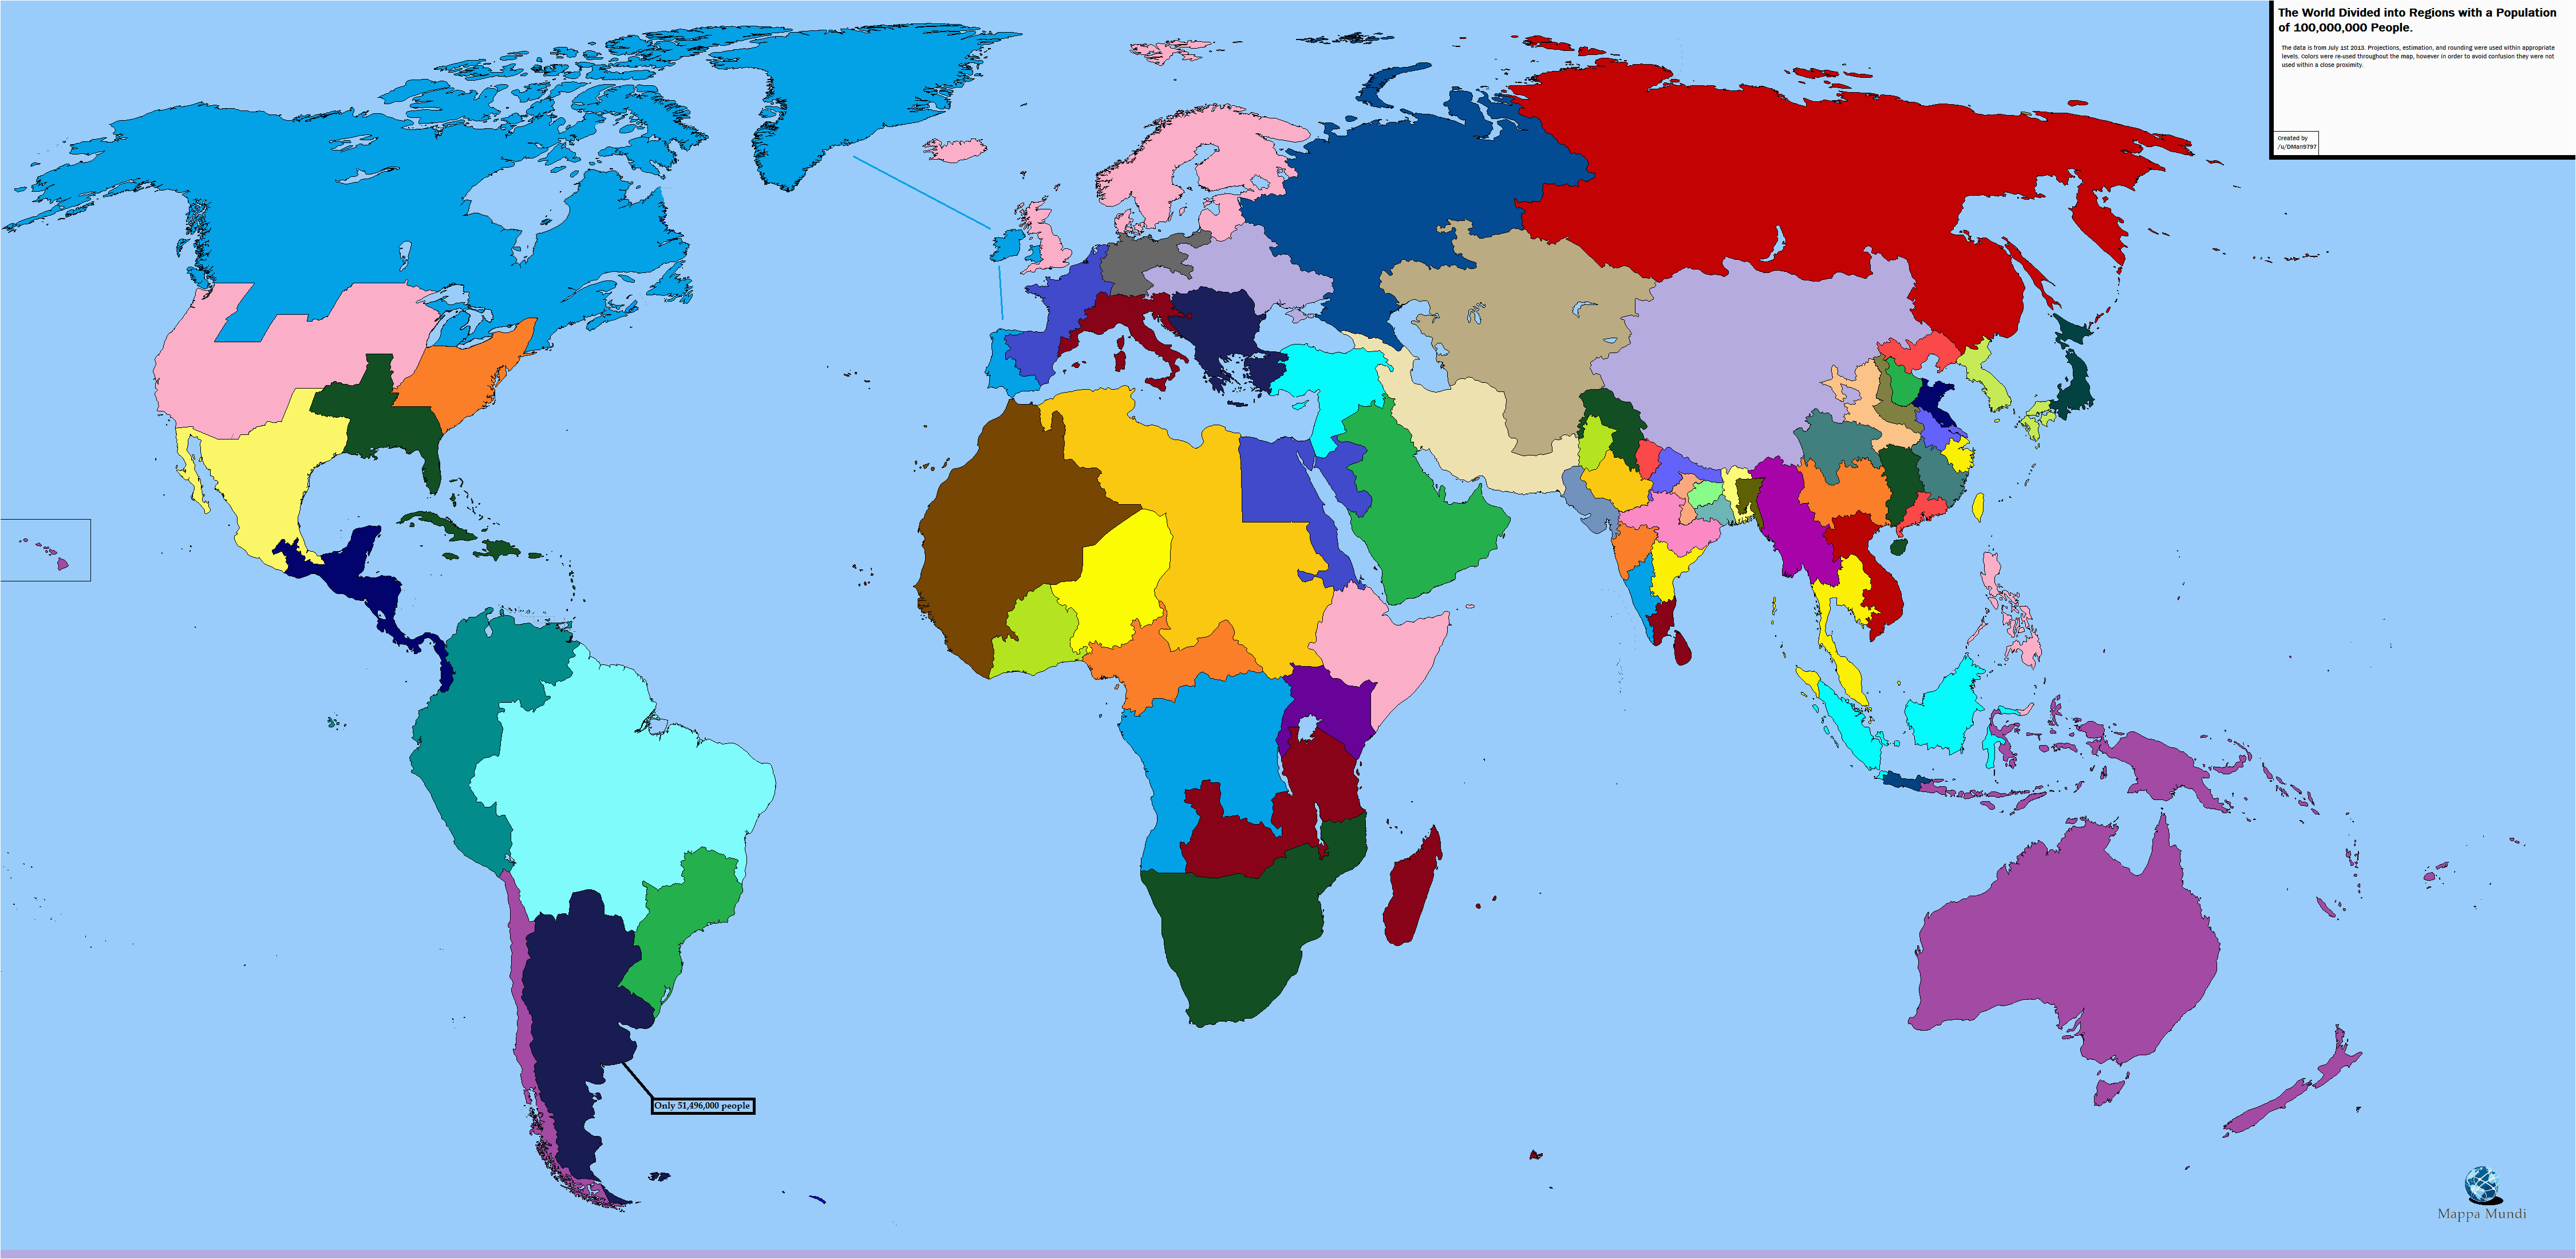 Italy Population Density Map the World Based On Population Density Business Insider